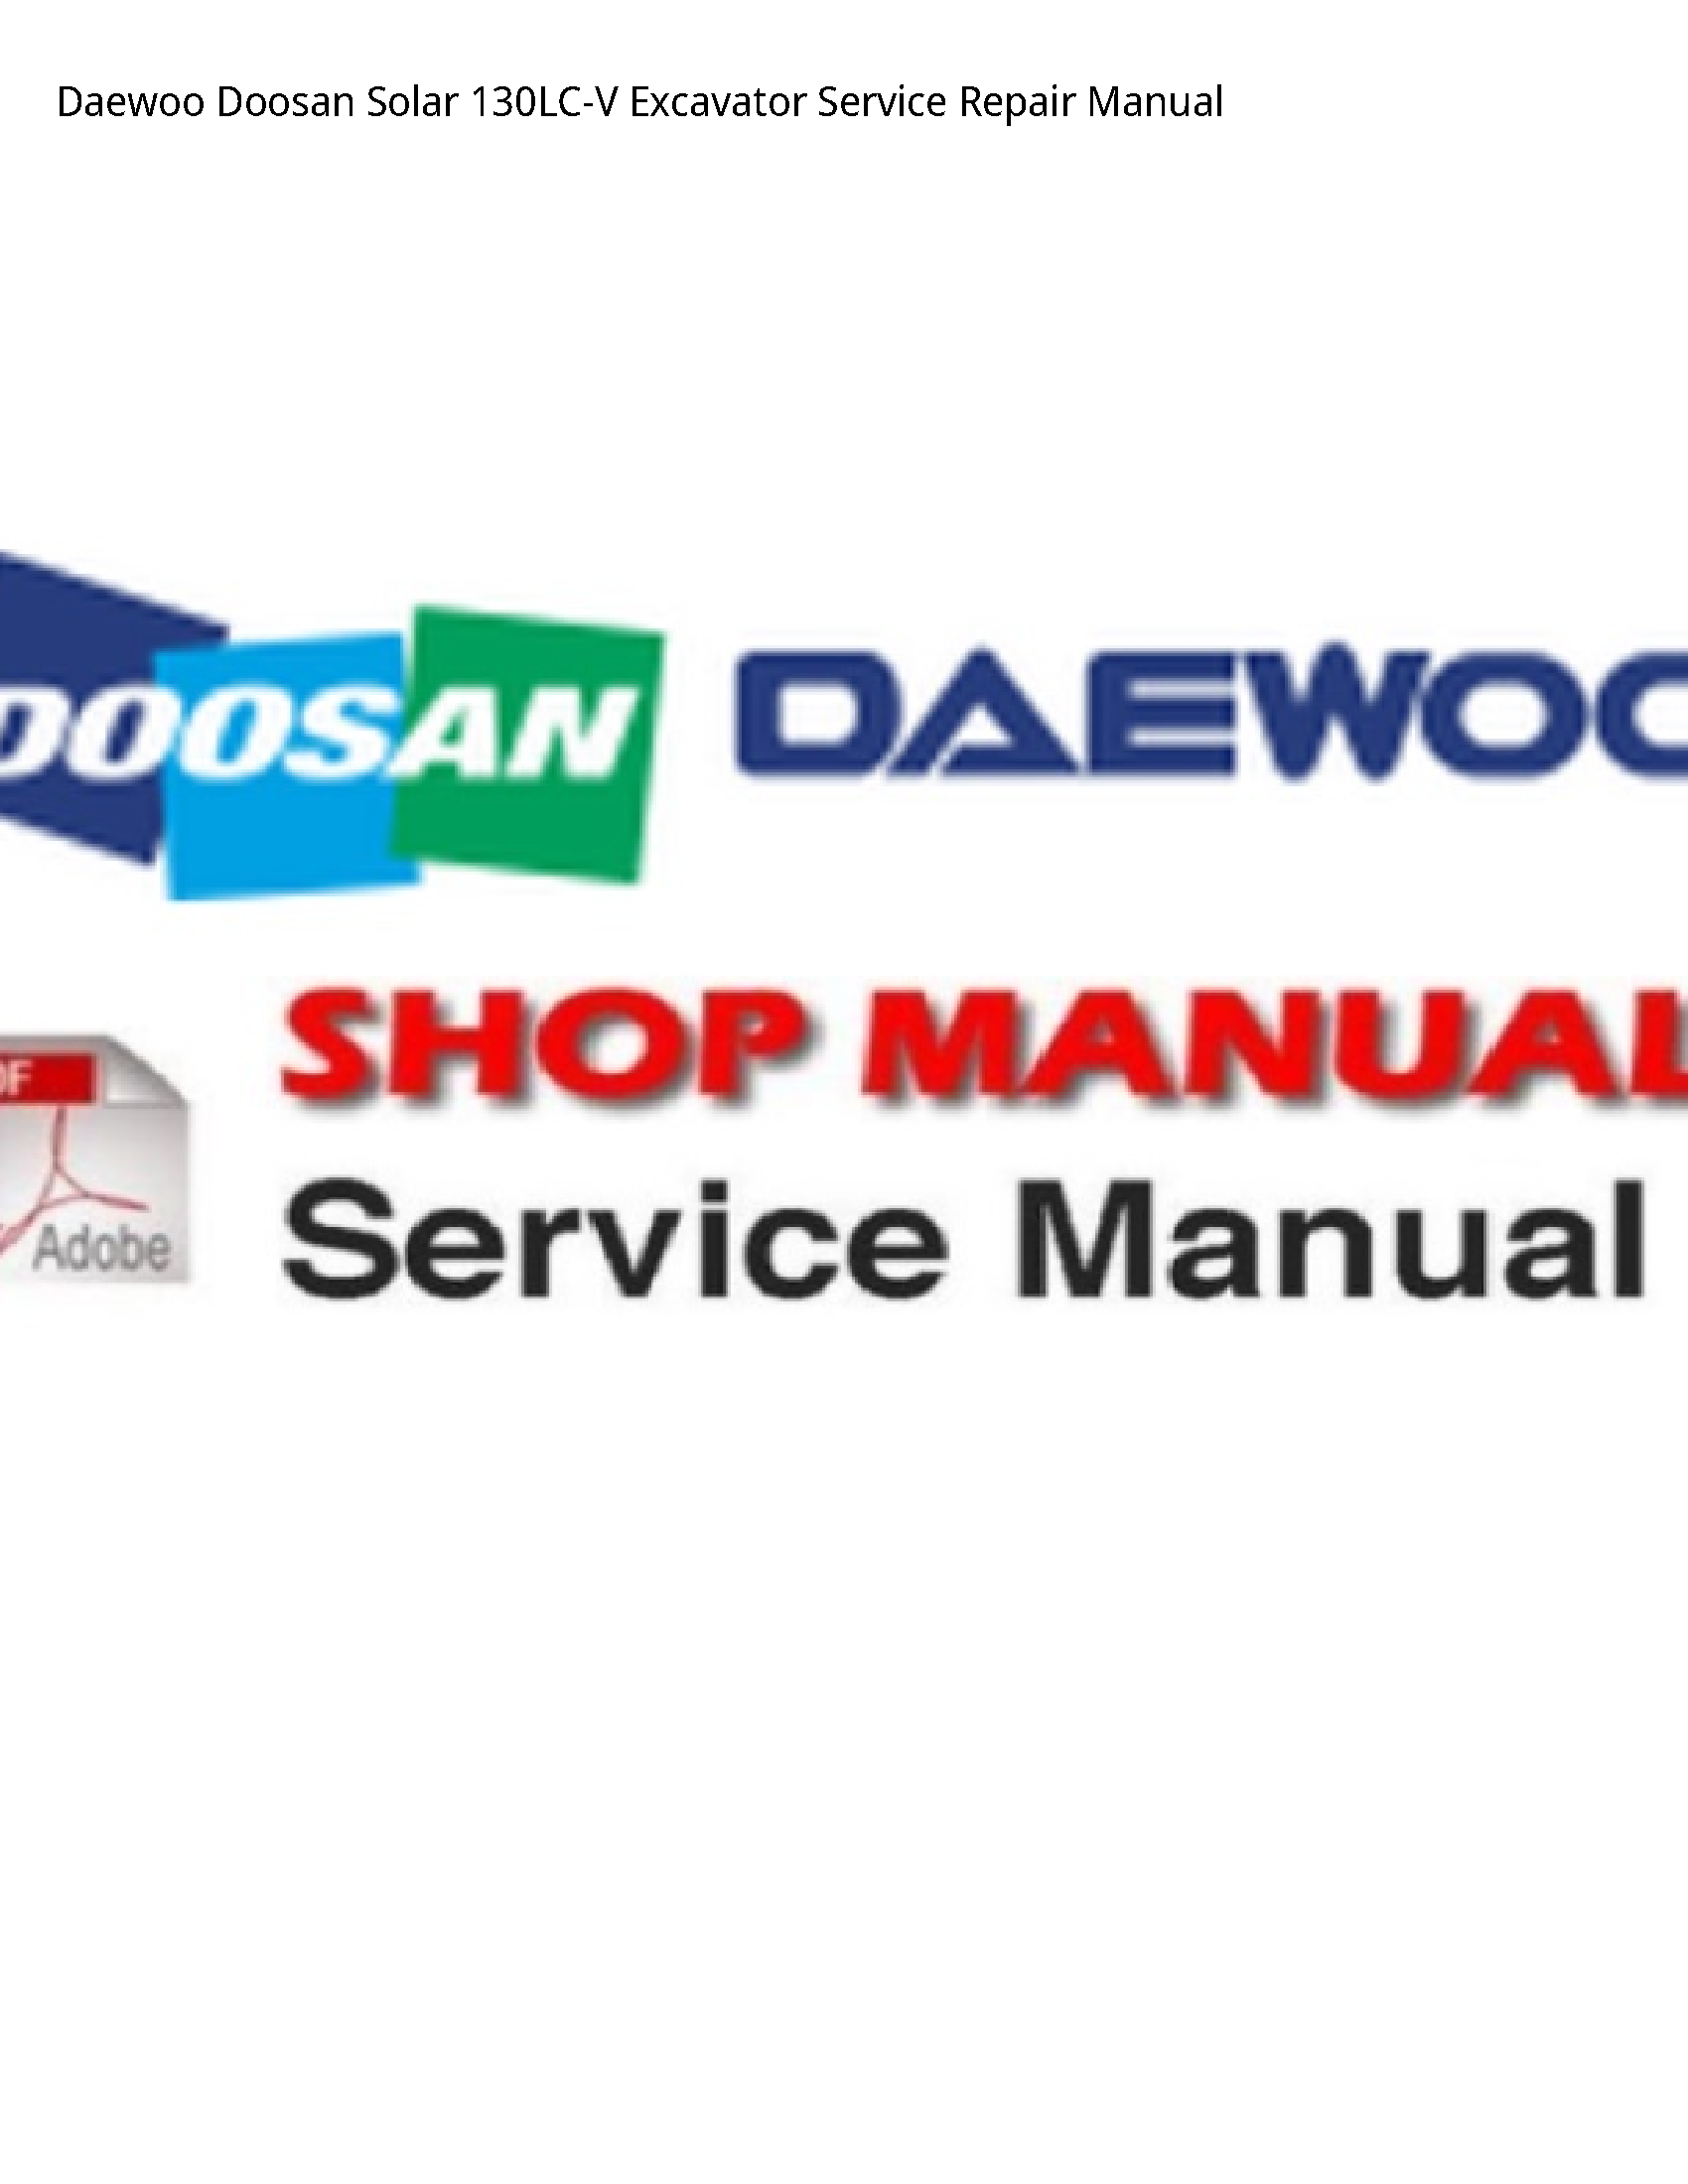 Daewoo Doosan 130LC-V Solar Excavator manual